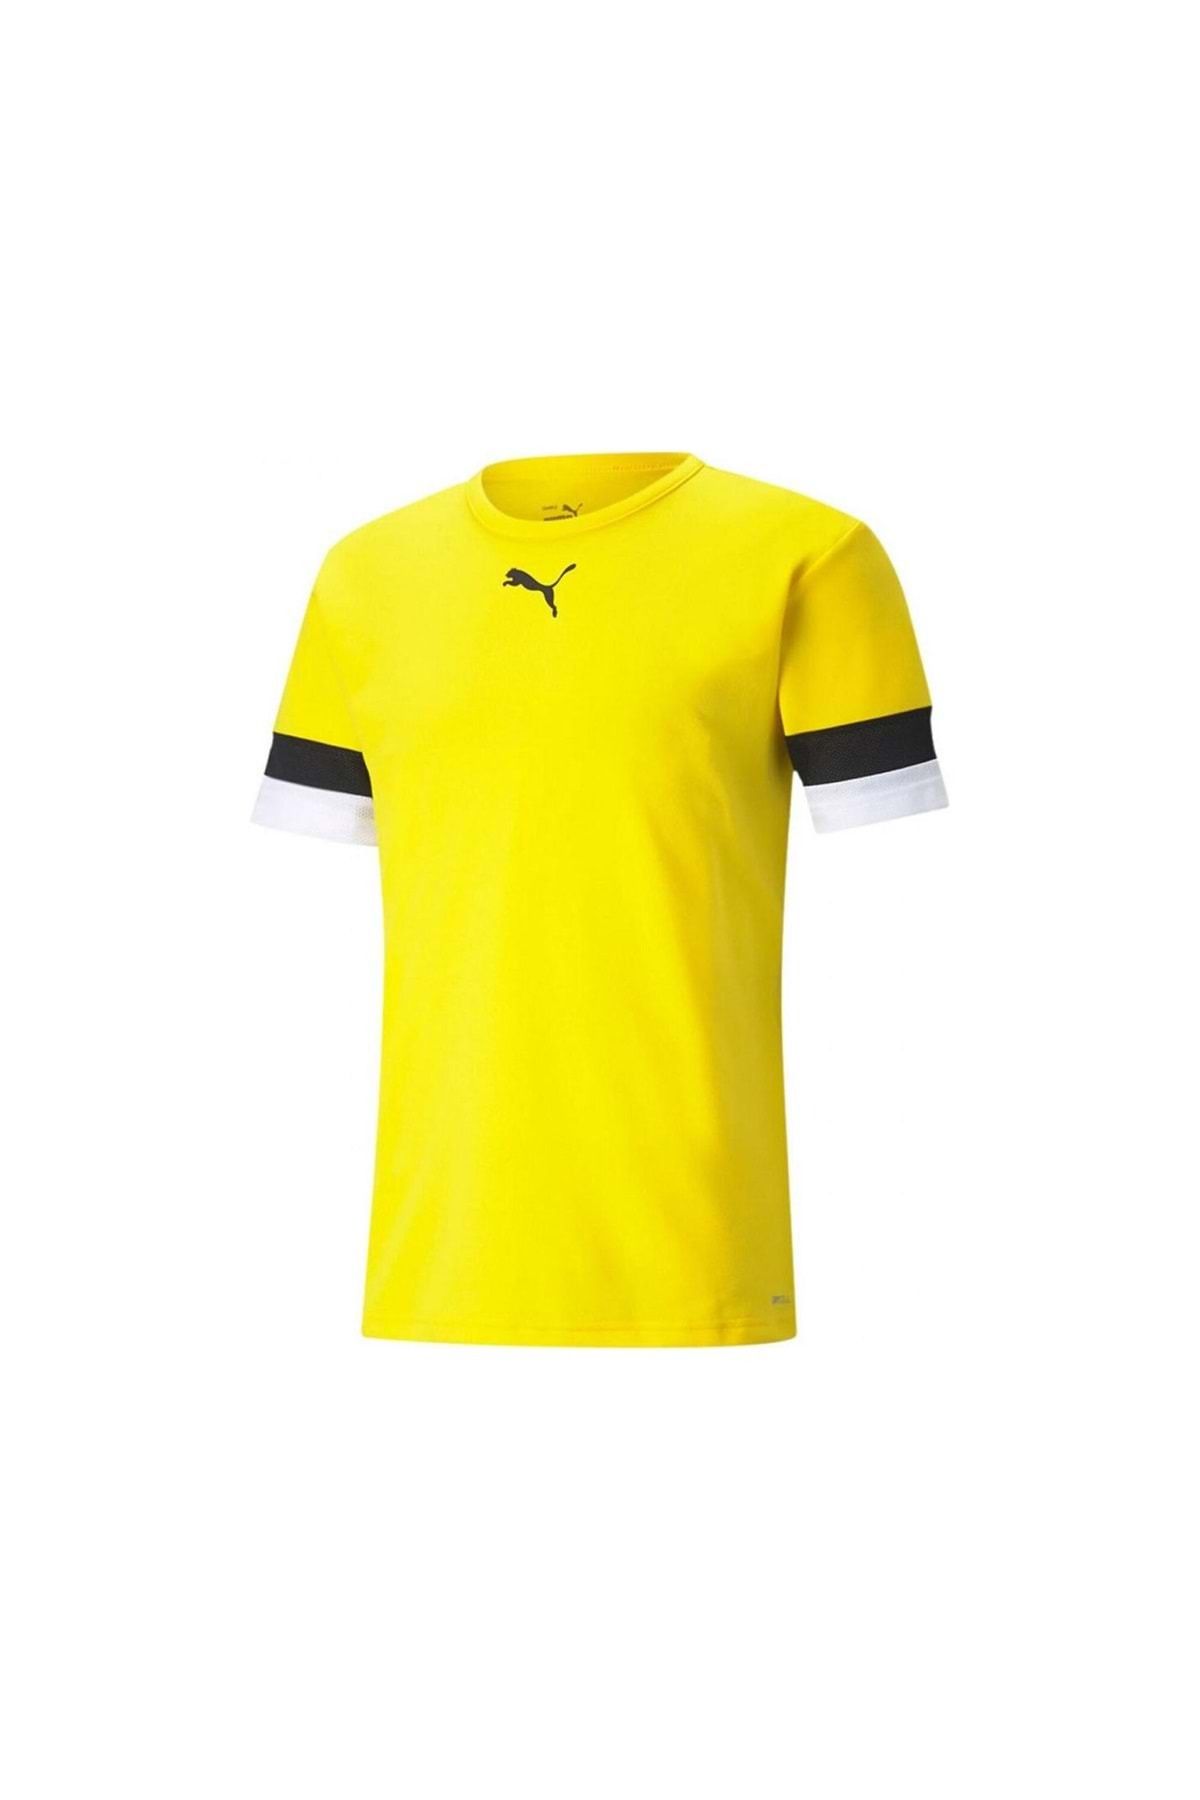 Puma 704932 Teamrise Jersey T-shirt Dry-cell Erkek Tişört Sarı